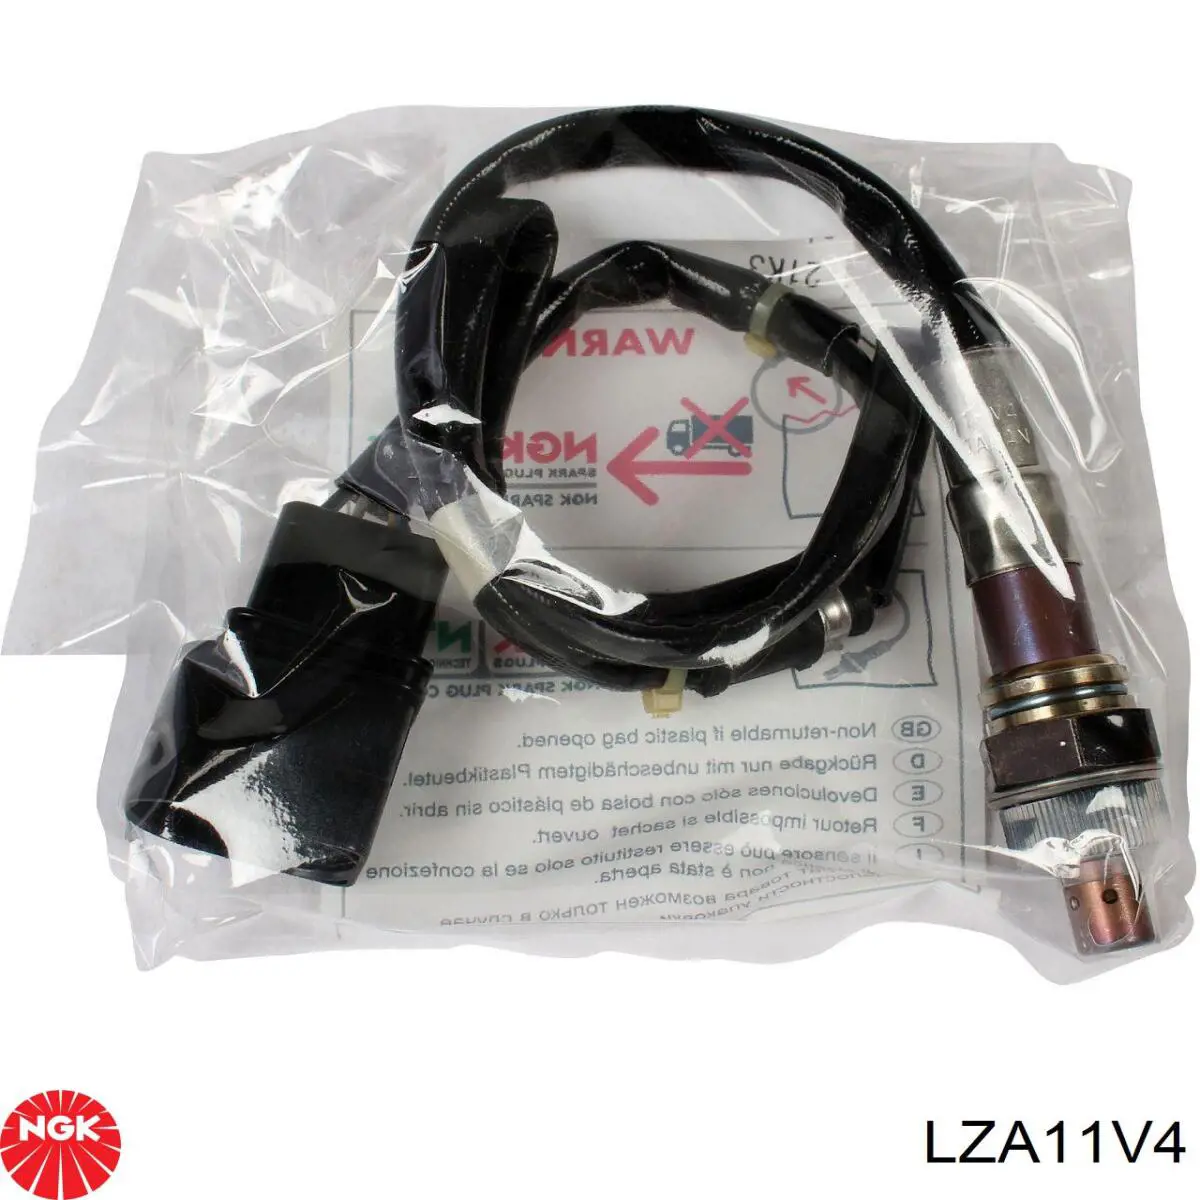 LZA11V4 NGK sonda lambda sensor de oxigeno para catalizador